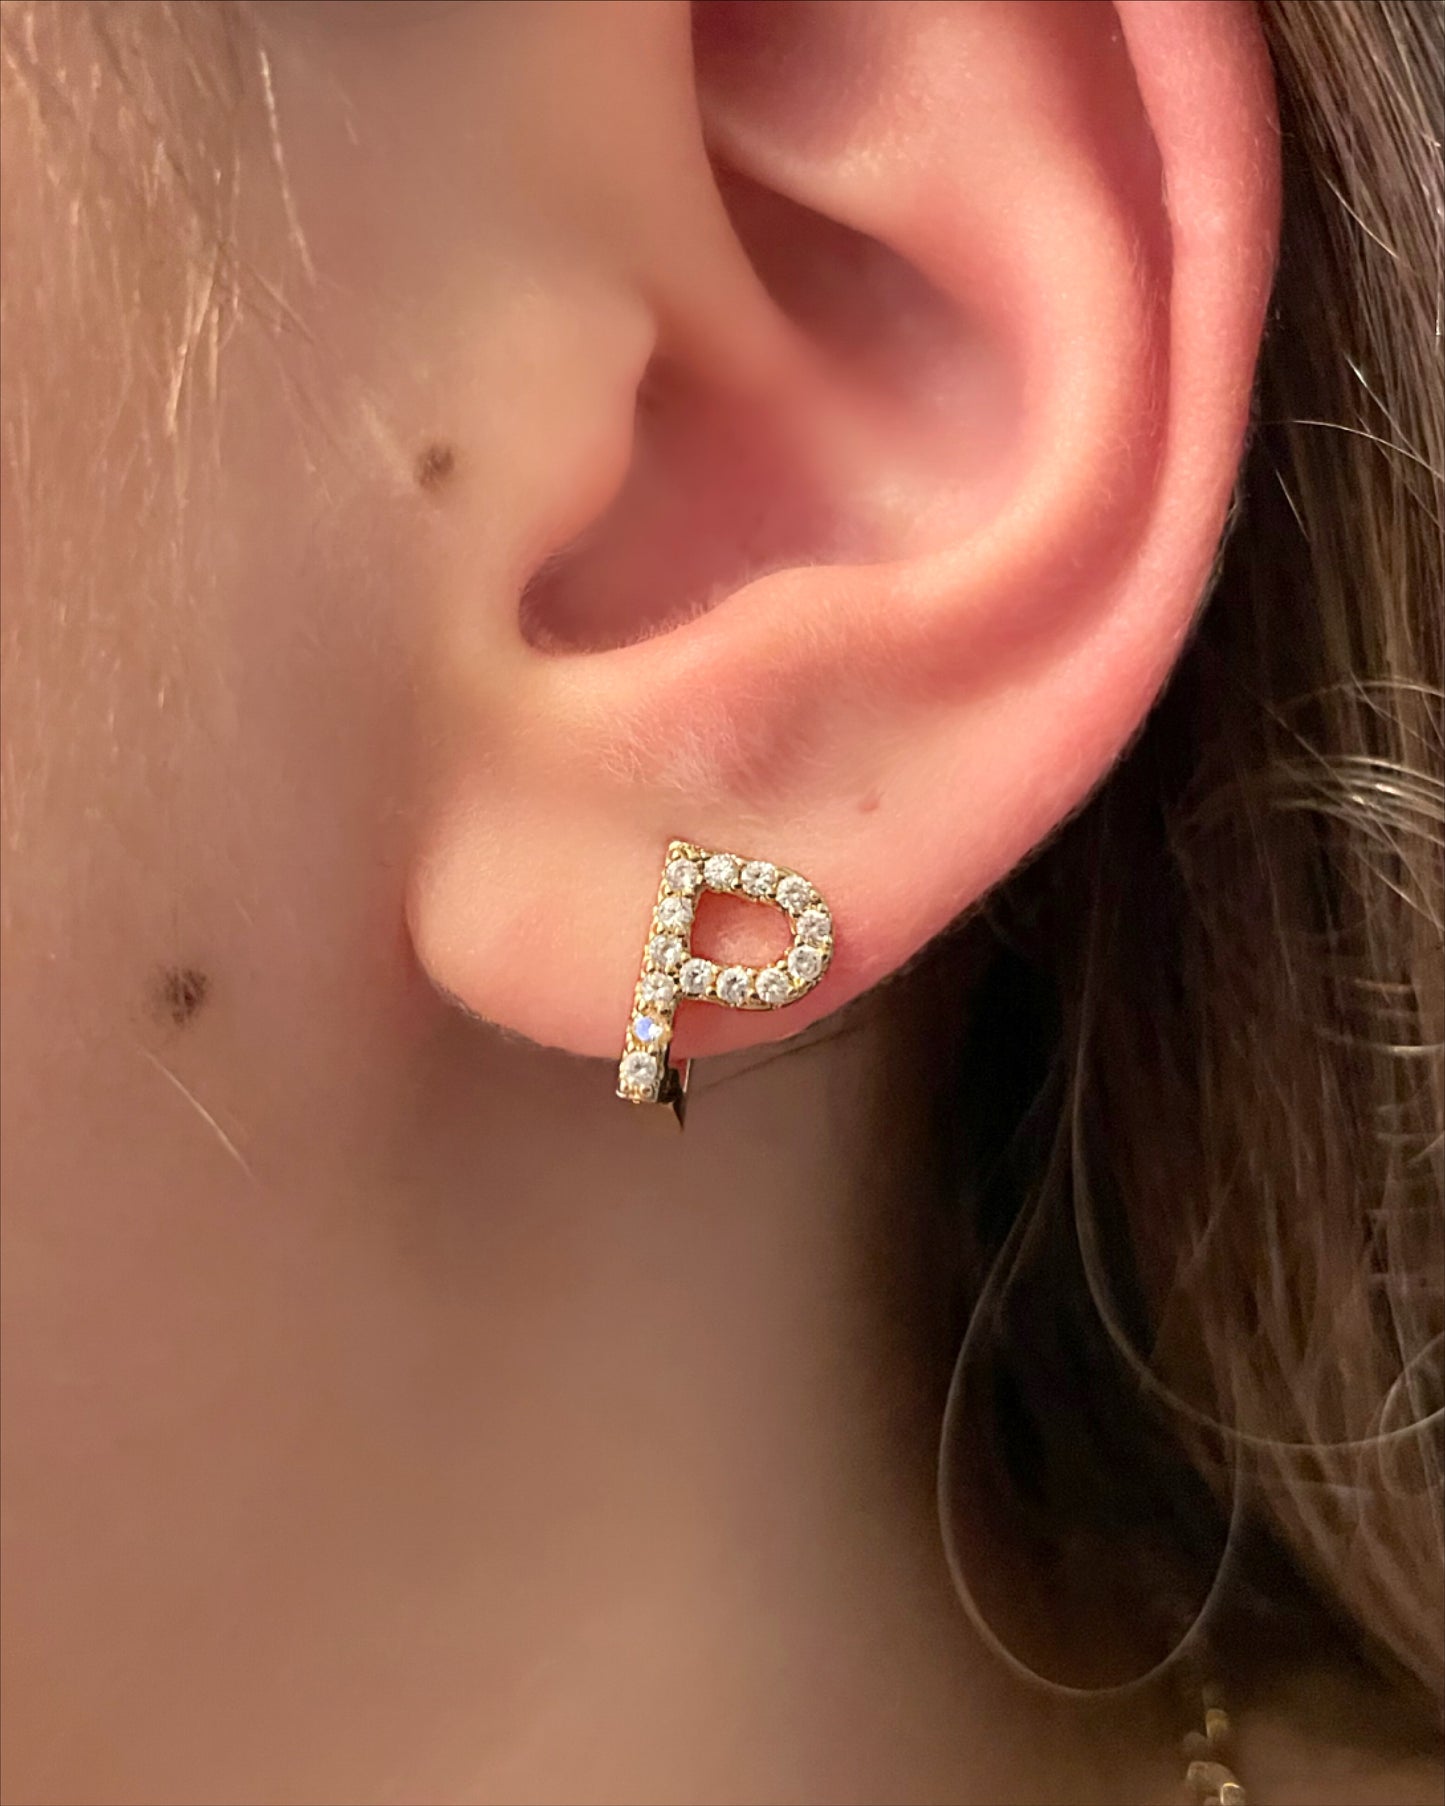 Reversible initial earrings